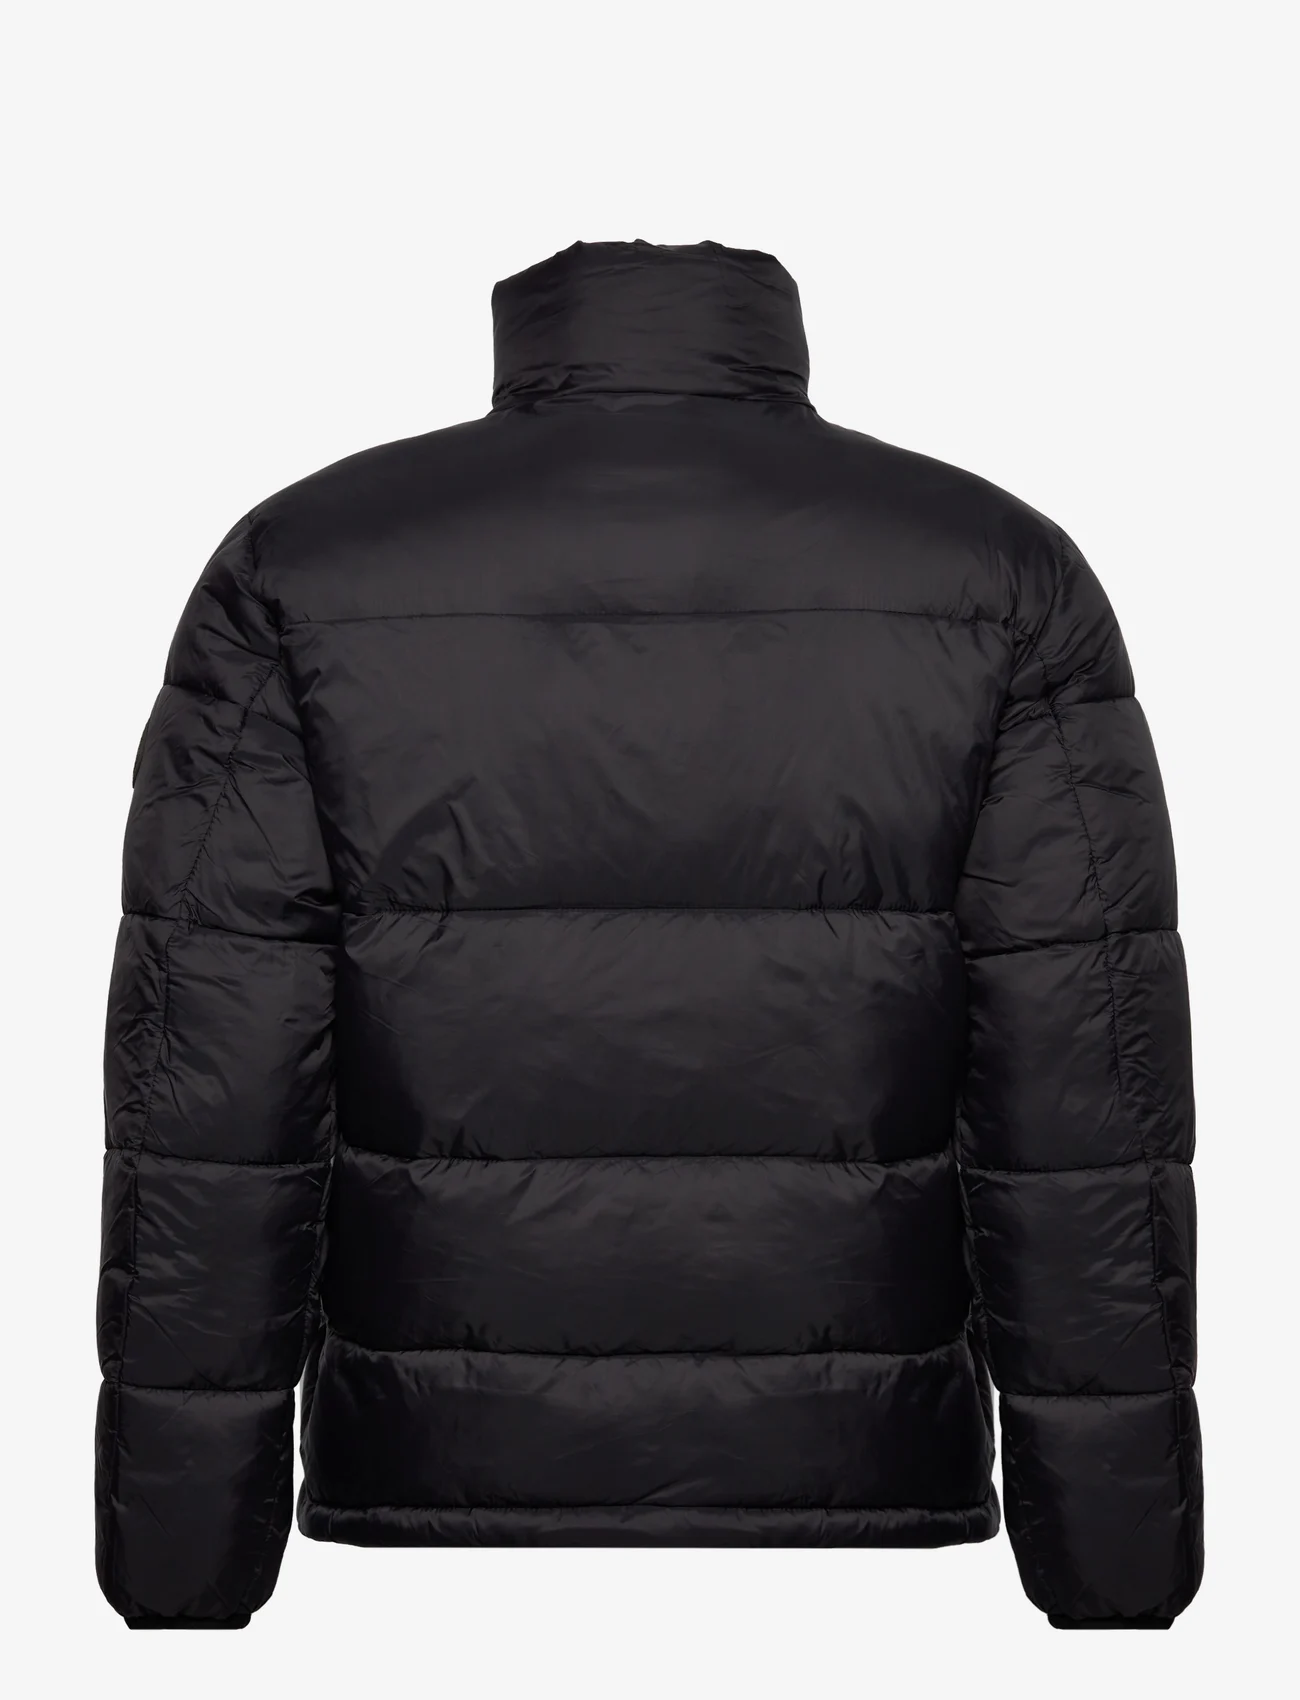 Lindbergh - Padded jacket with standup collar - winterjacken - black - 1